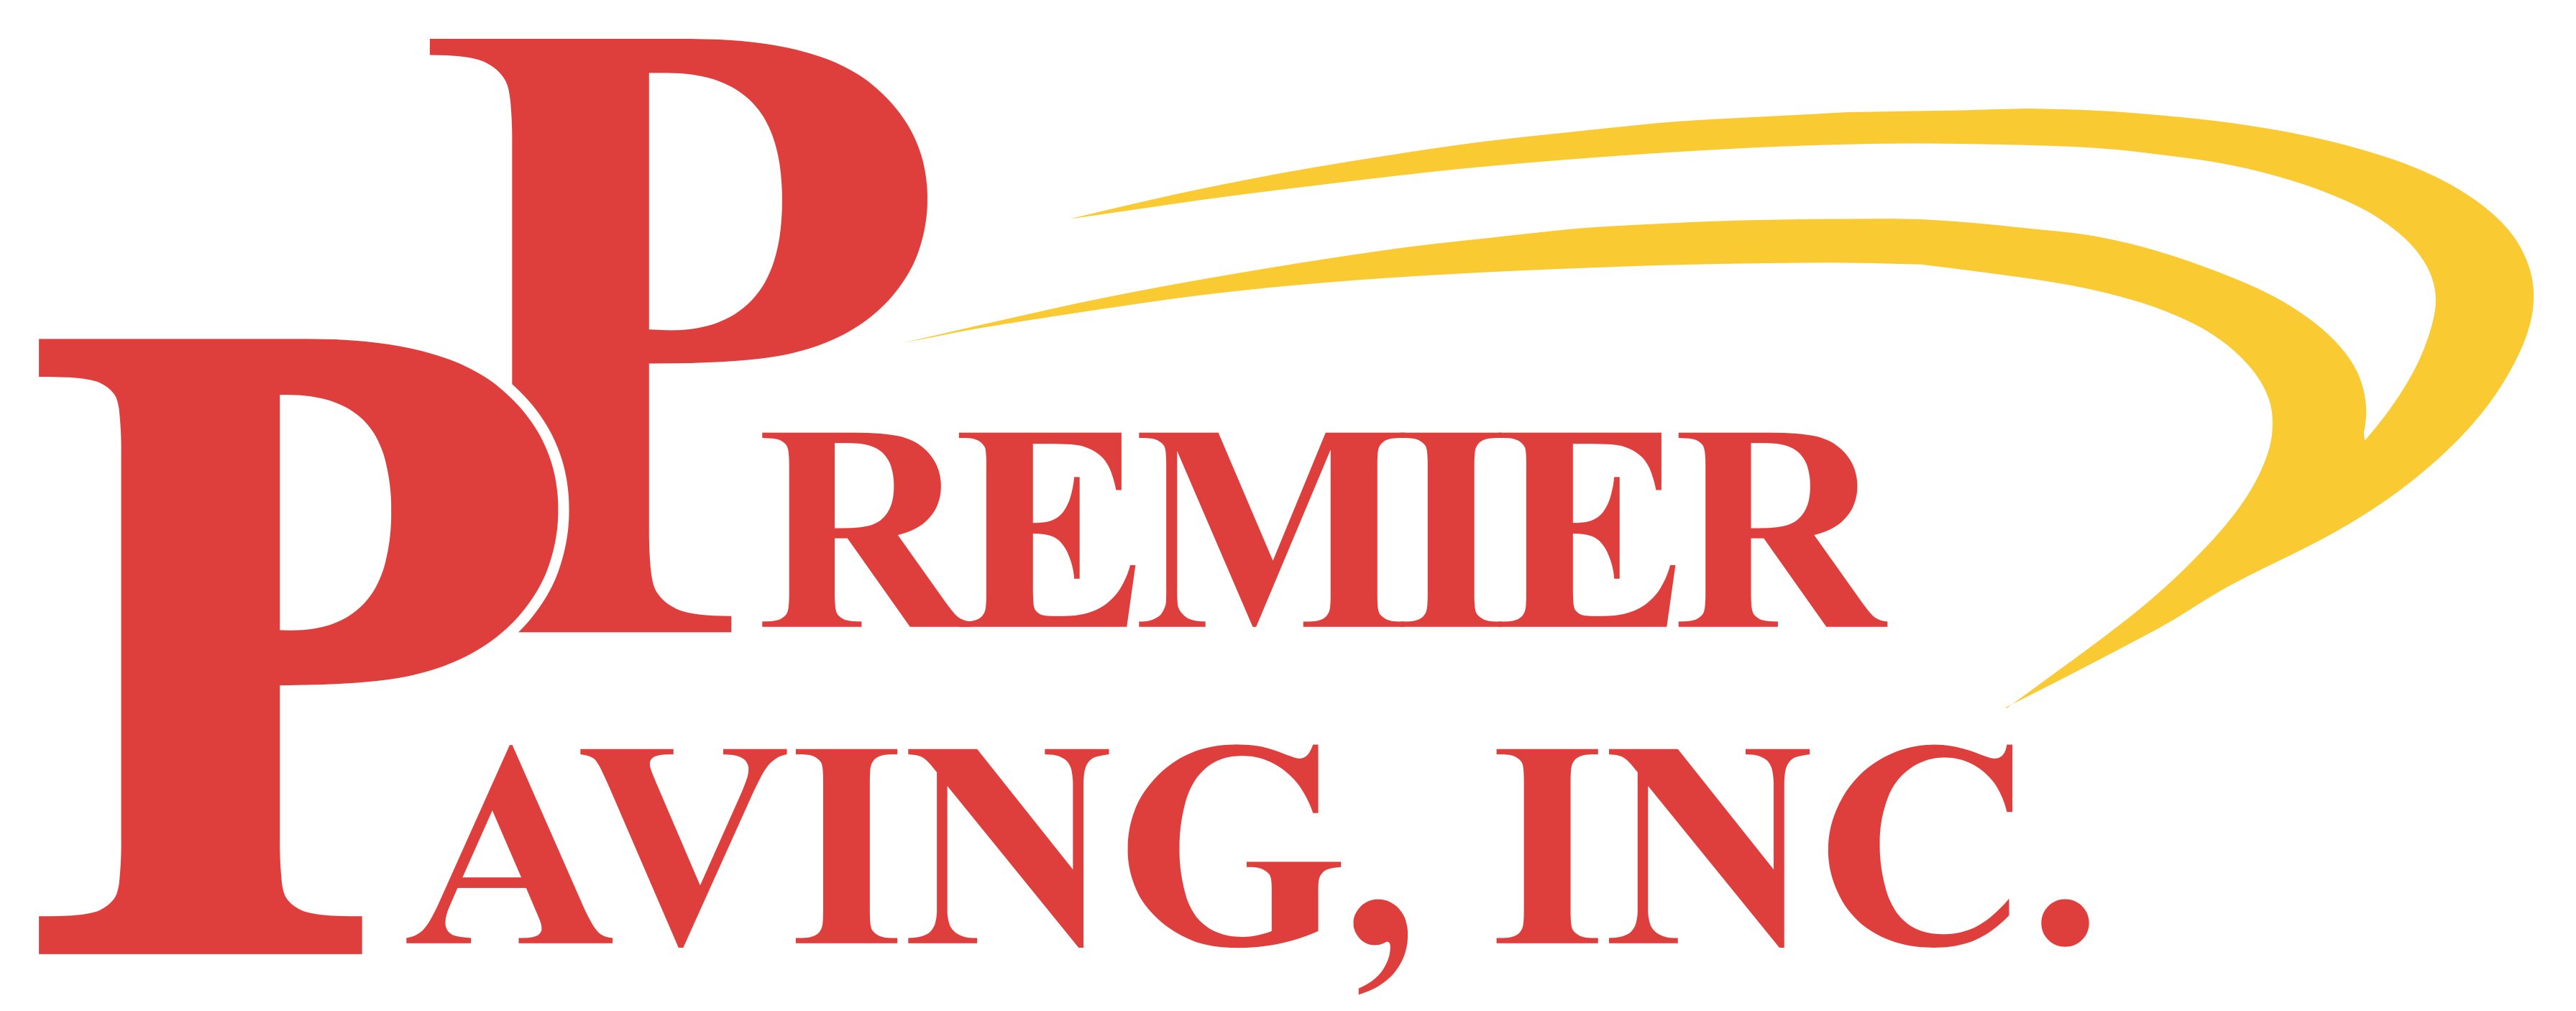 Premier Paving of Northern Illinois, Inc. Logo